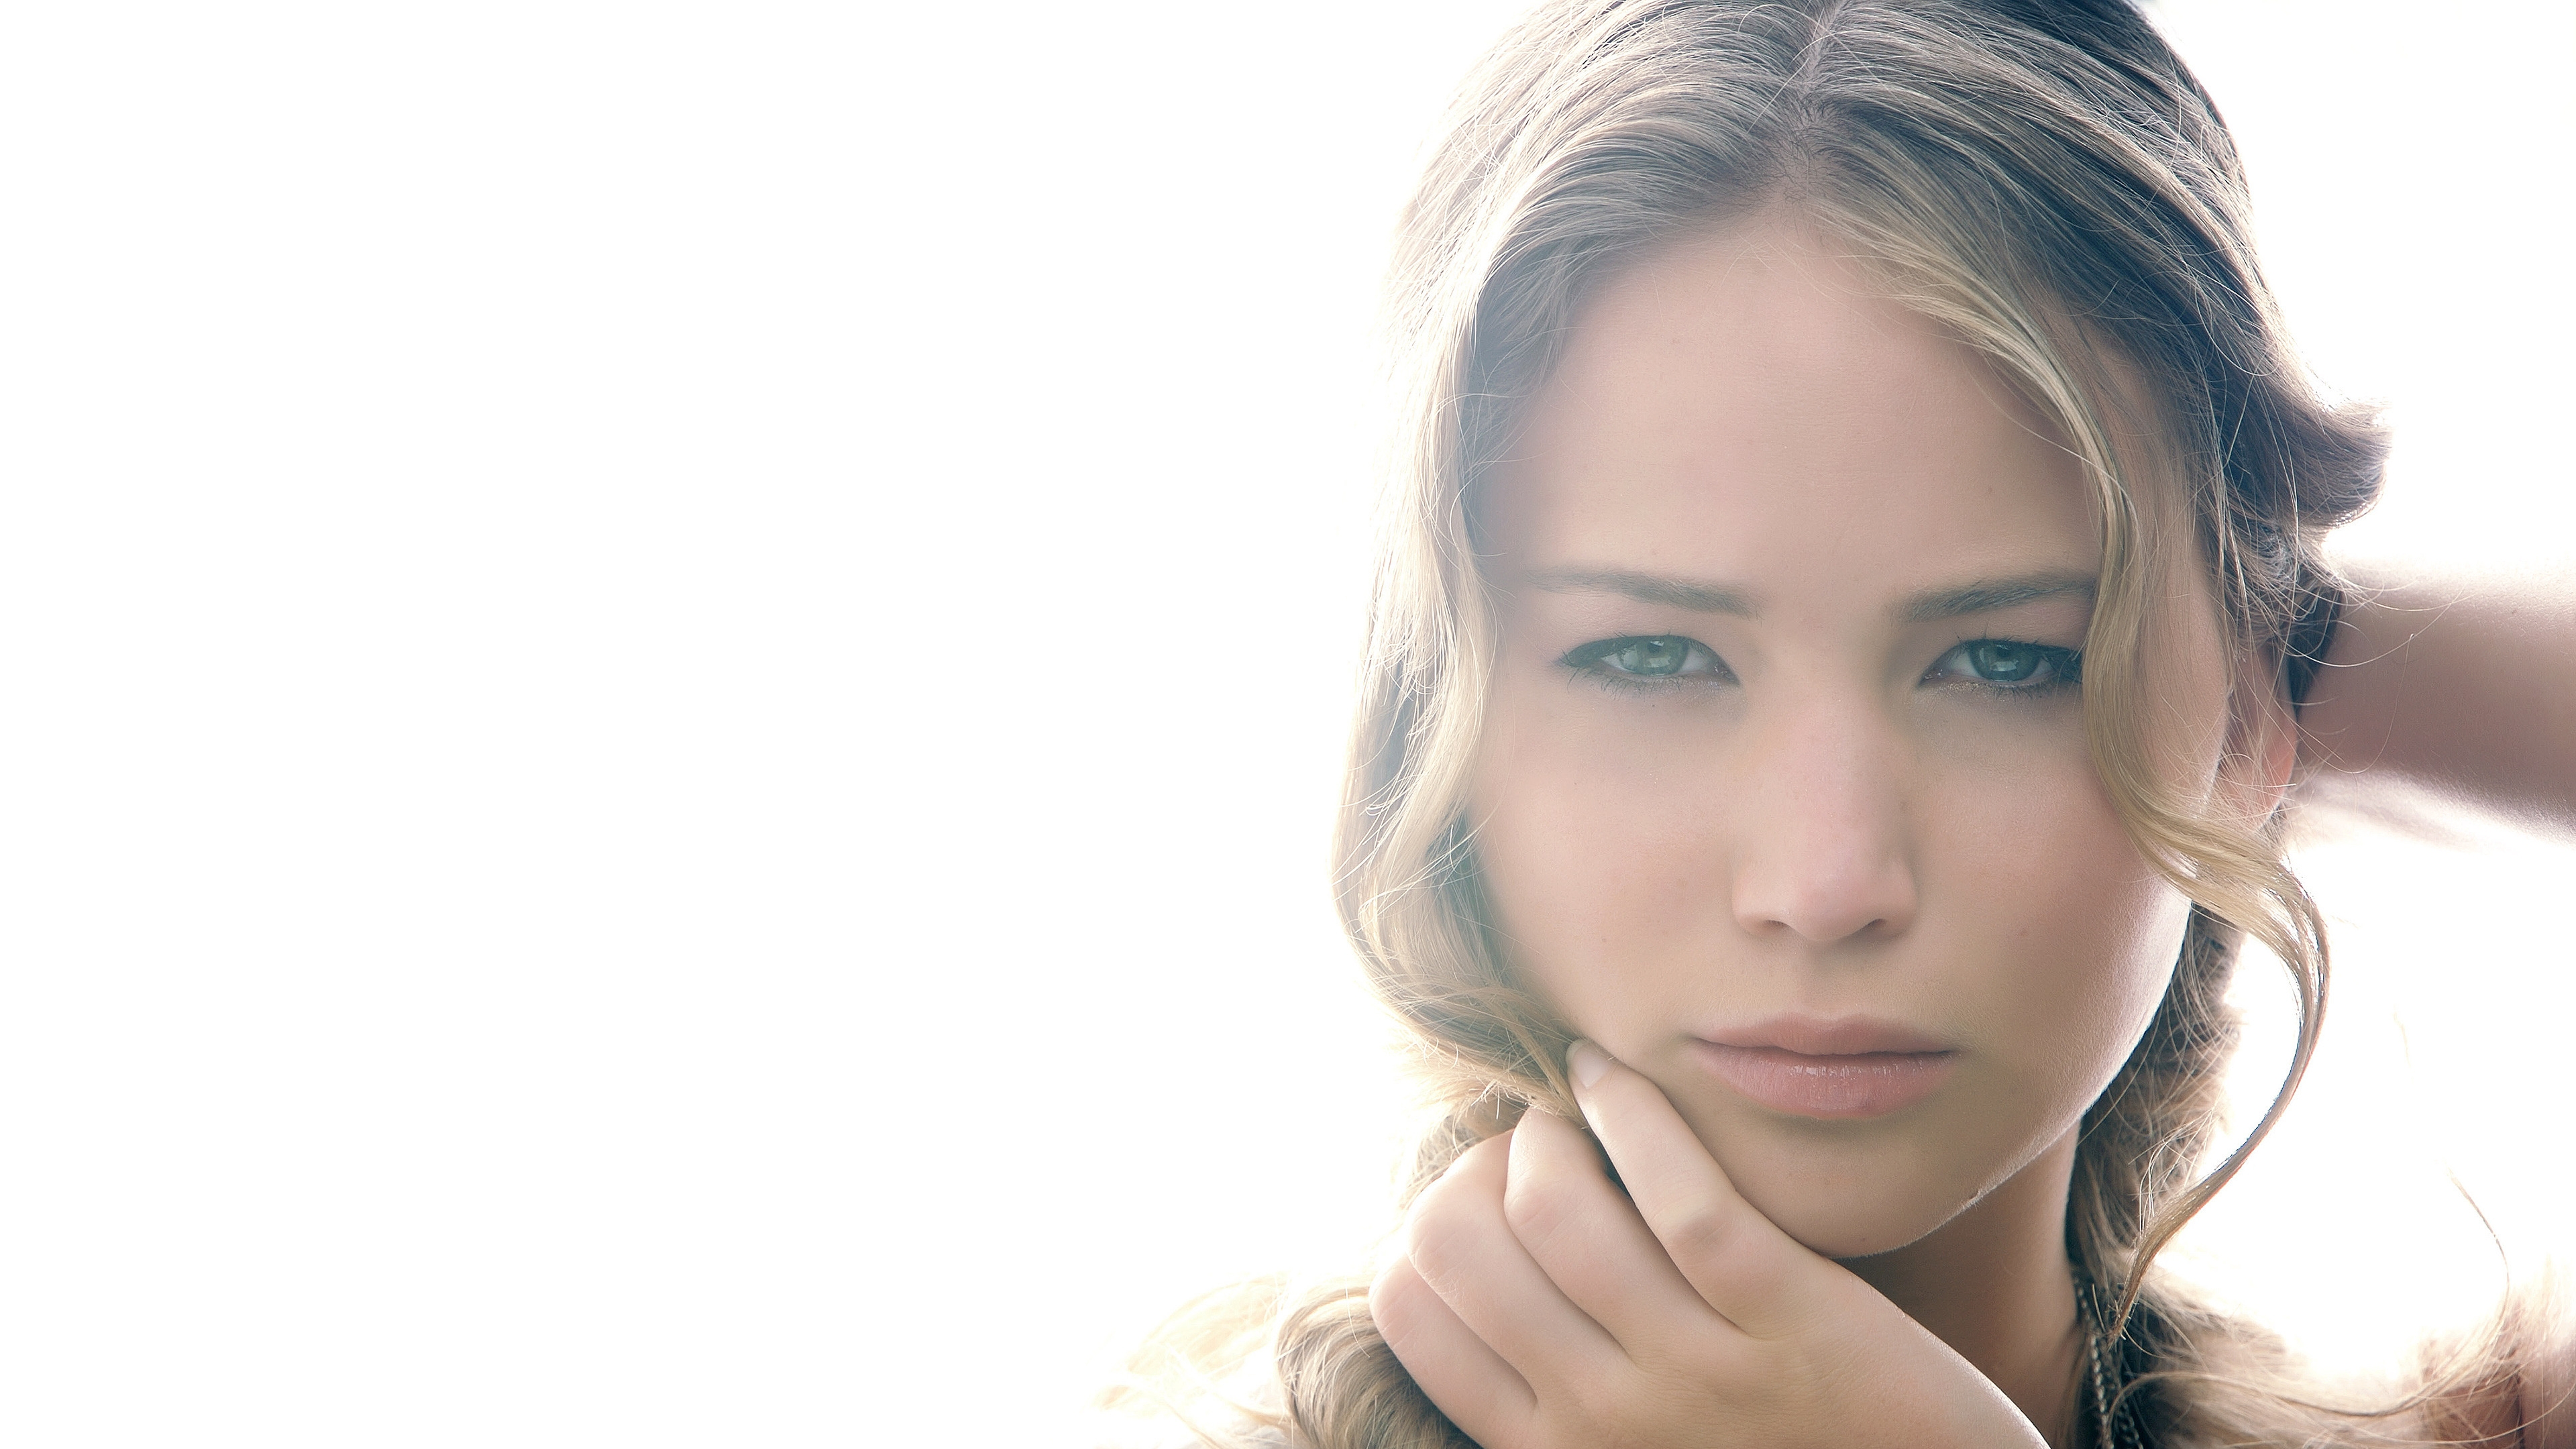 Jennifer Lawrence Beautiful for 3840 x 2160 Ultra HD resolution